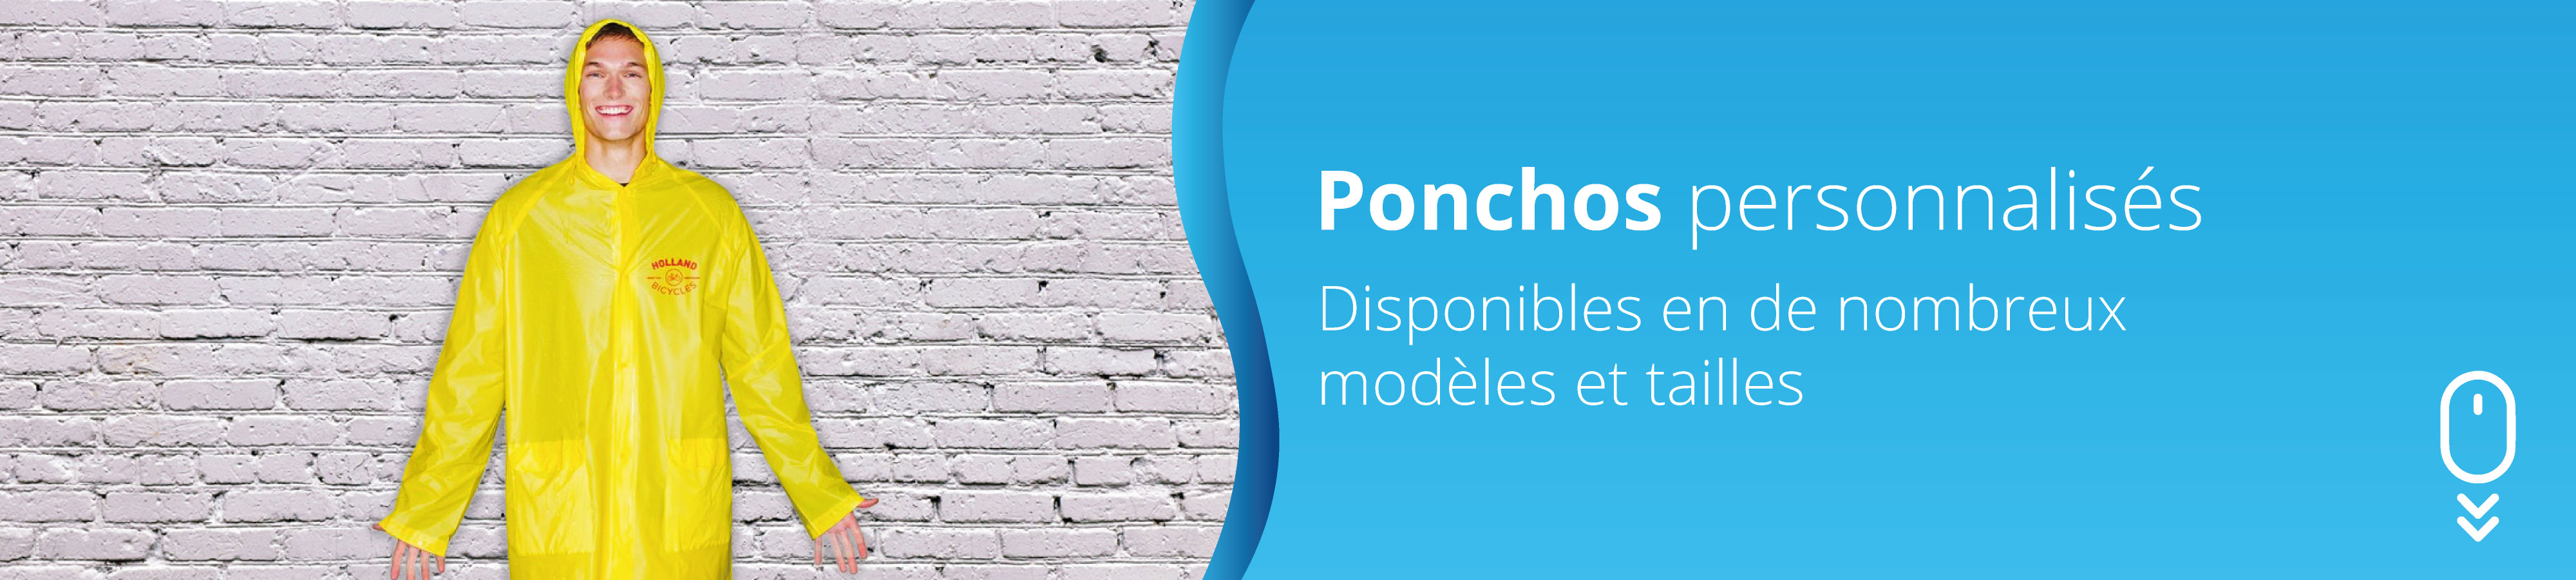 Ponchos-personnalises-publicitaireseH2pXgcH6TUb1